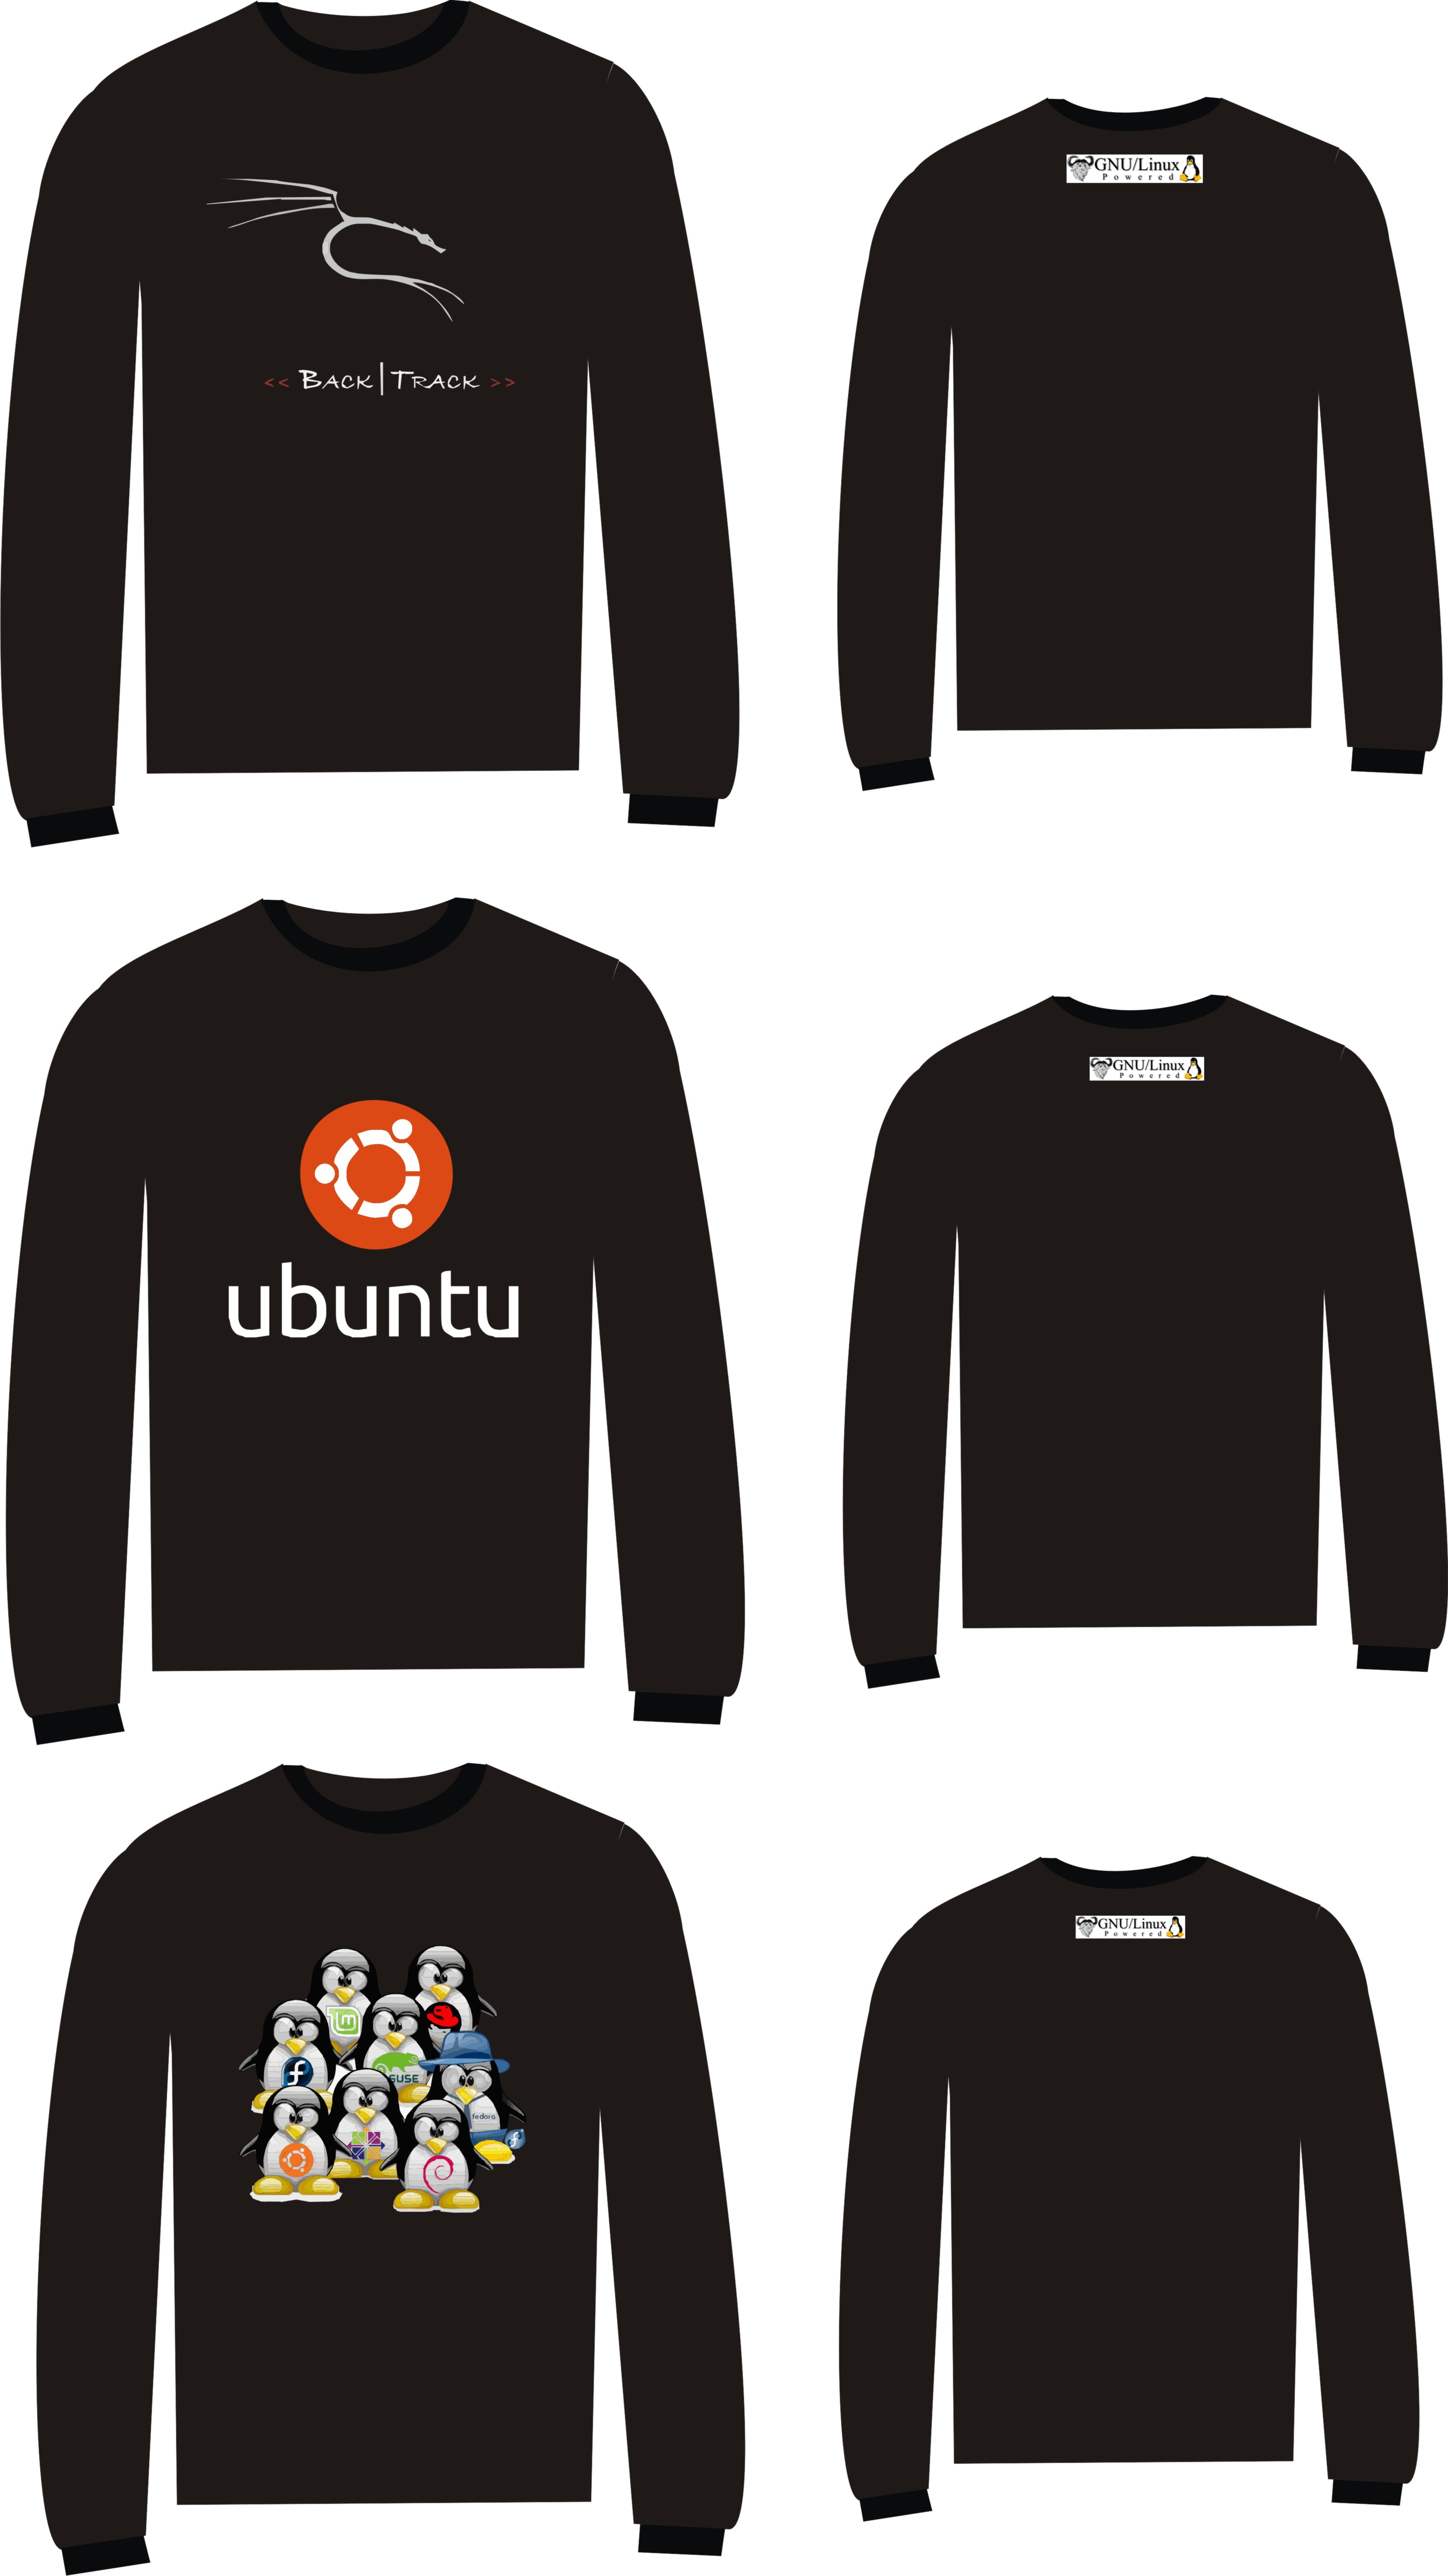 [Menyambut 2012] : Sweater Backtrack, Ubuntu, Tux Multi 